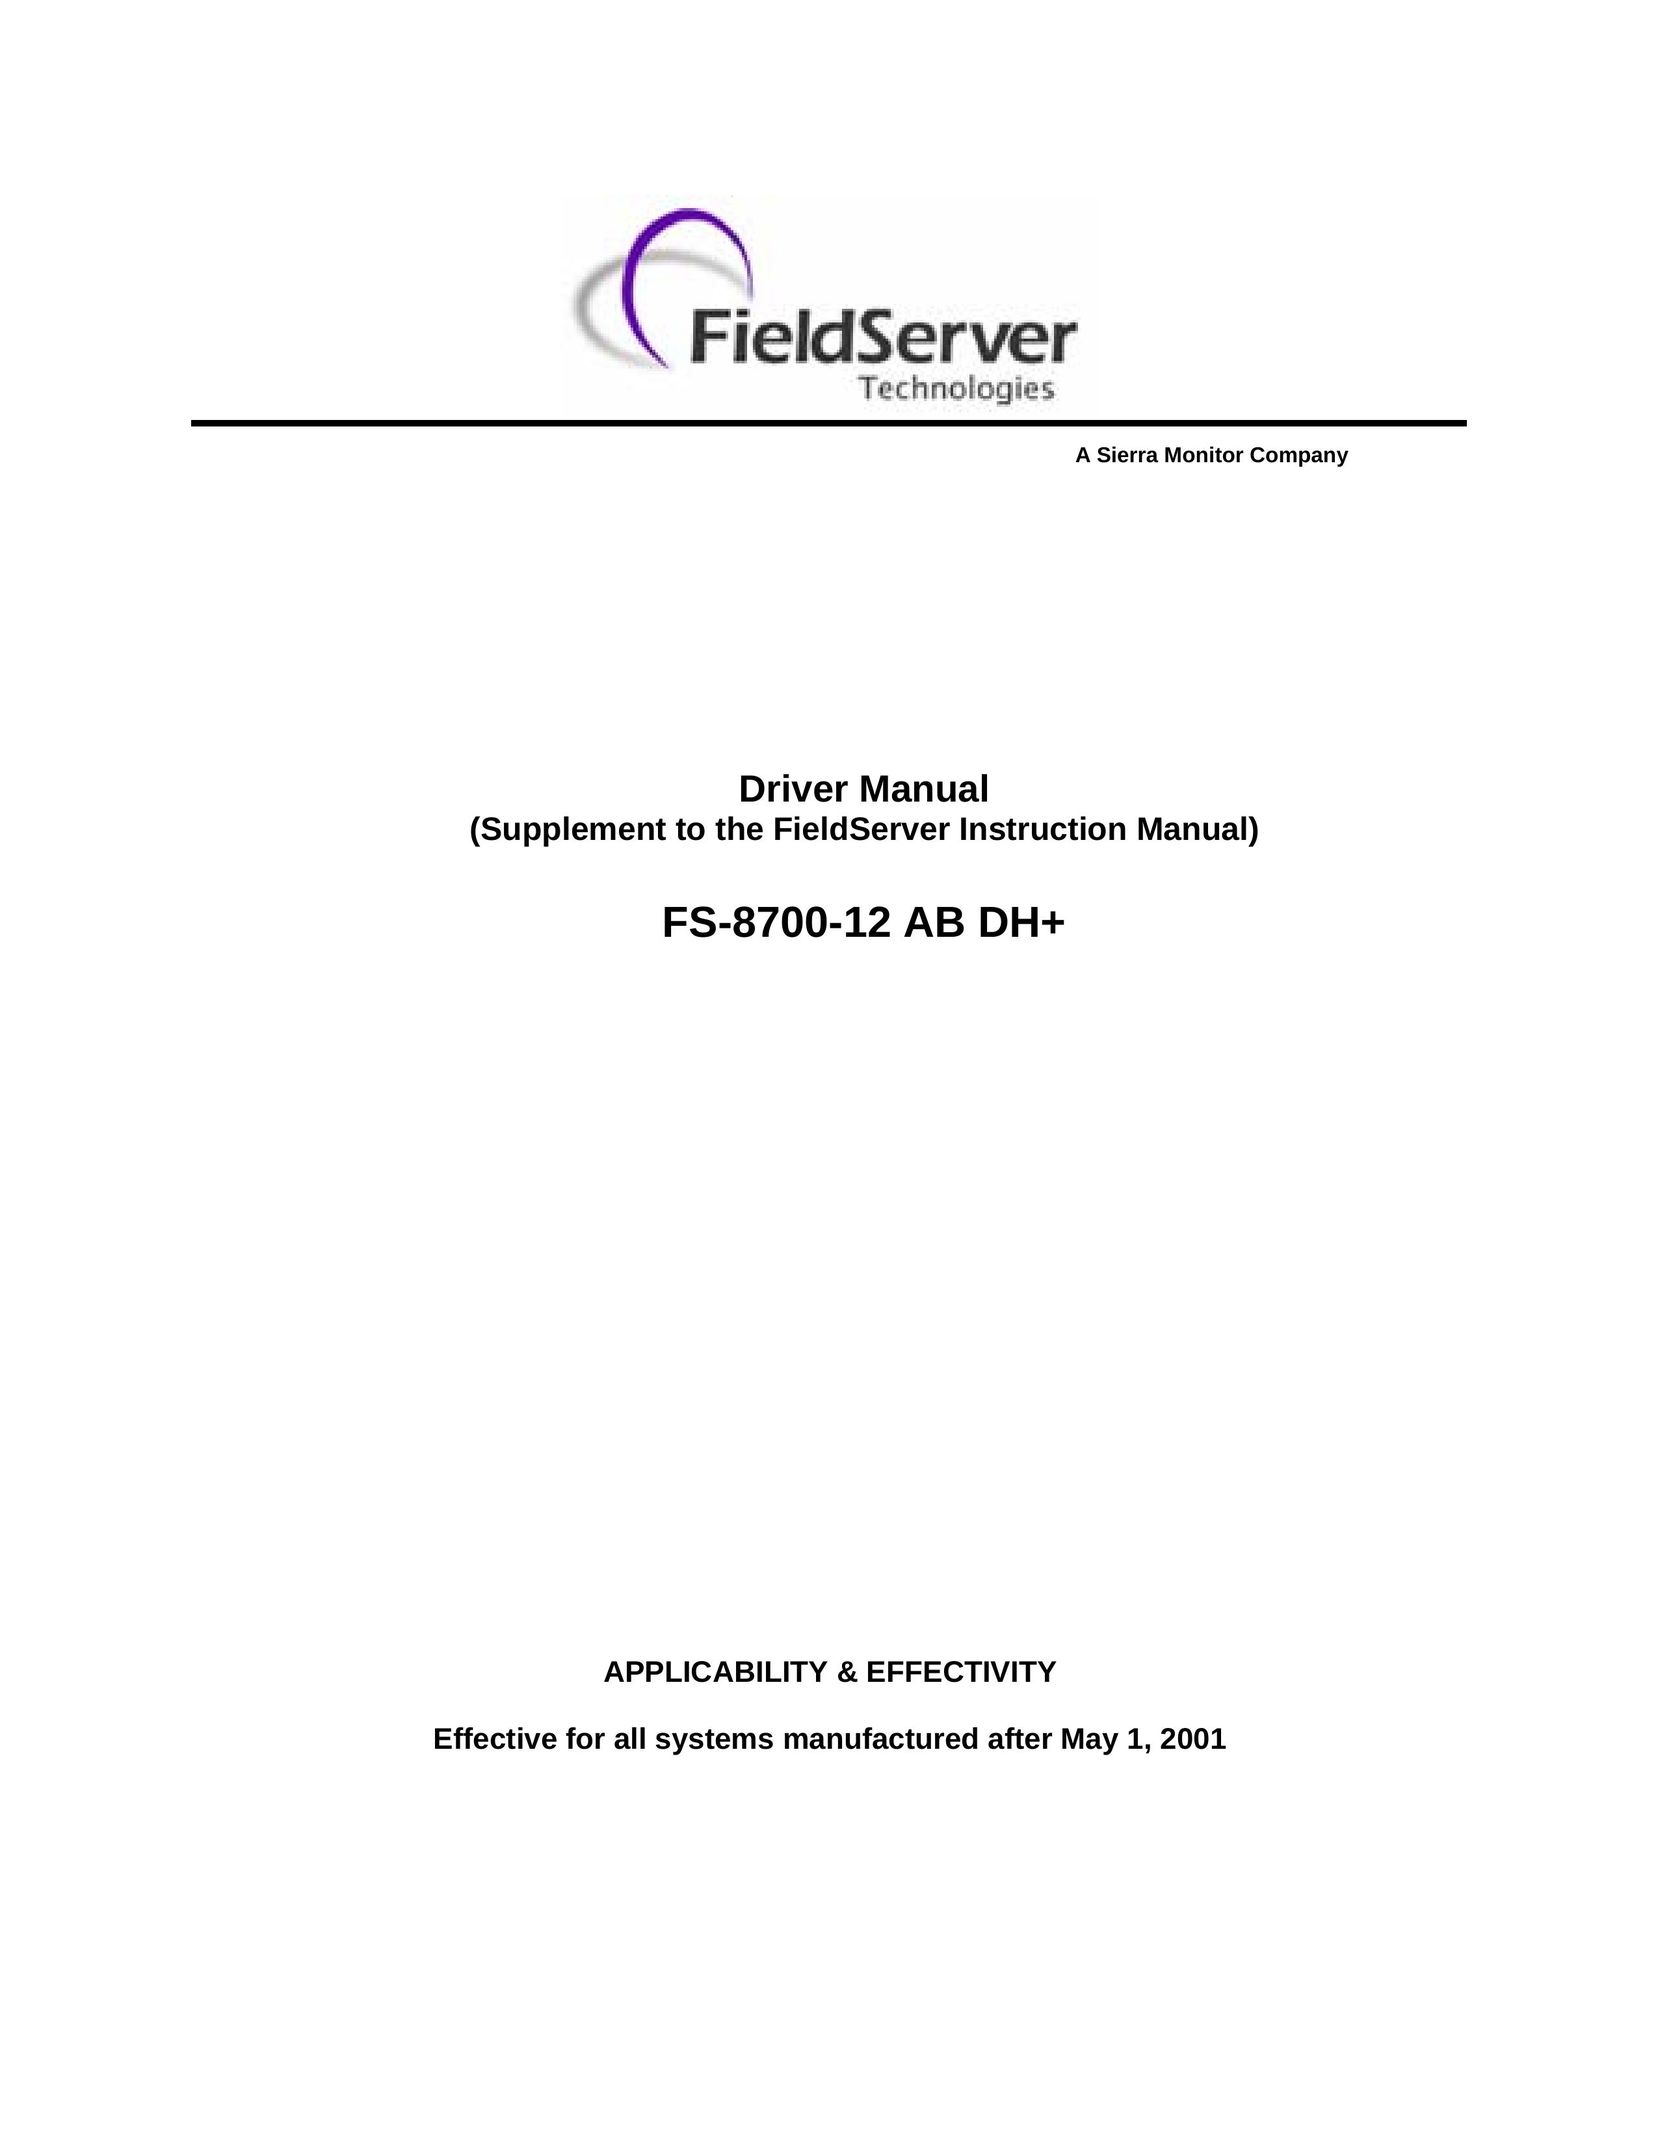 FieldServer FS-8700-12 Computer Drive User Manual